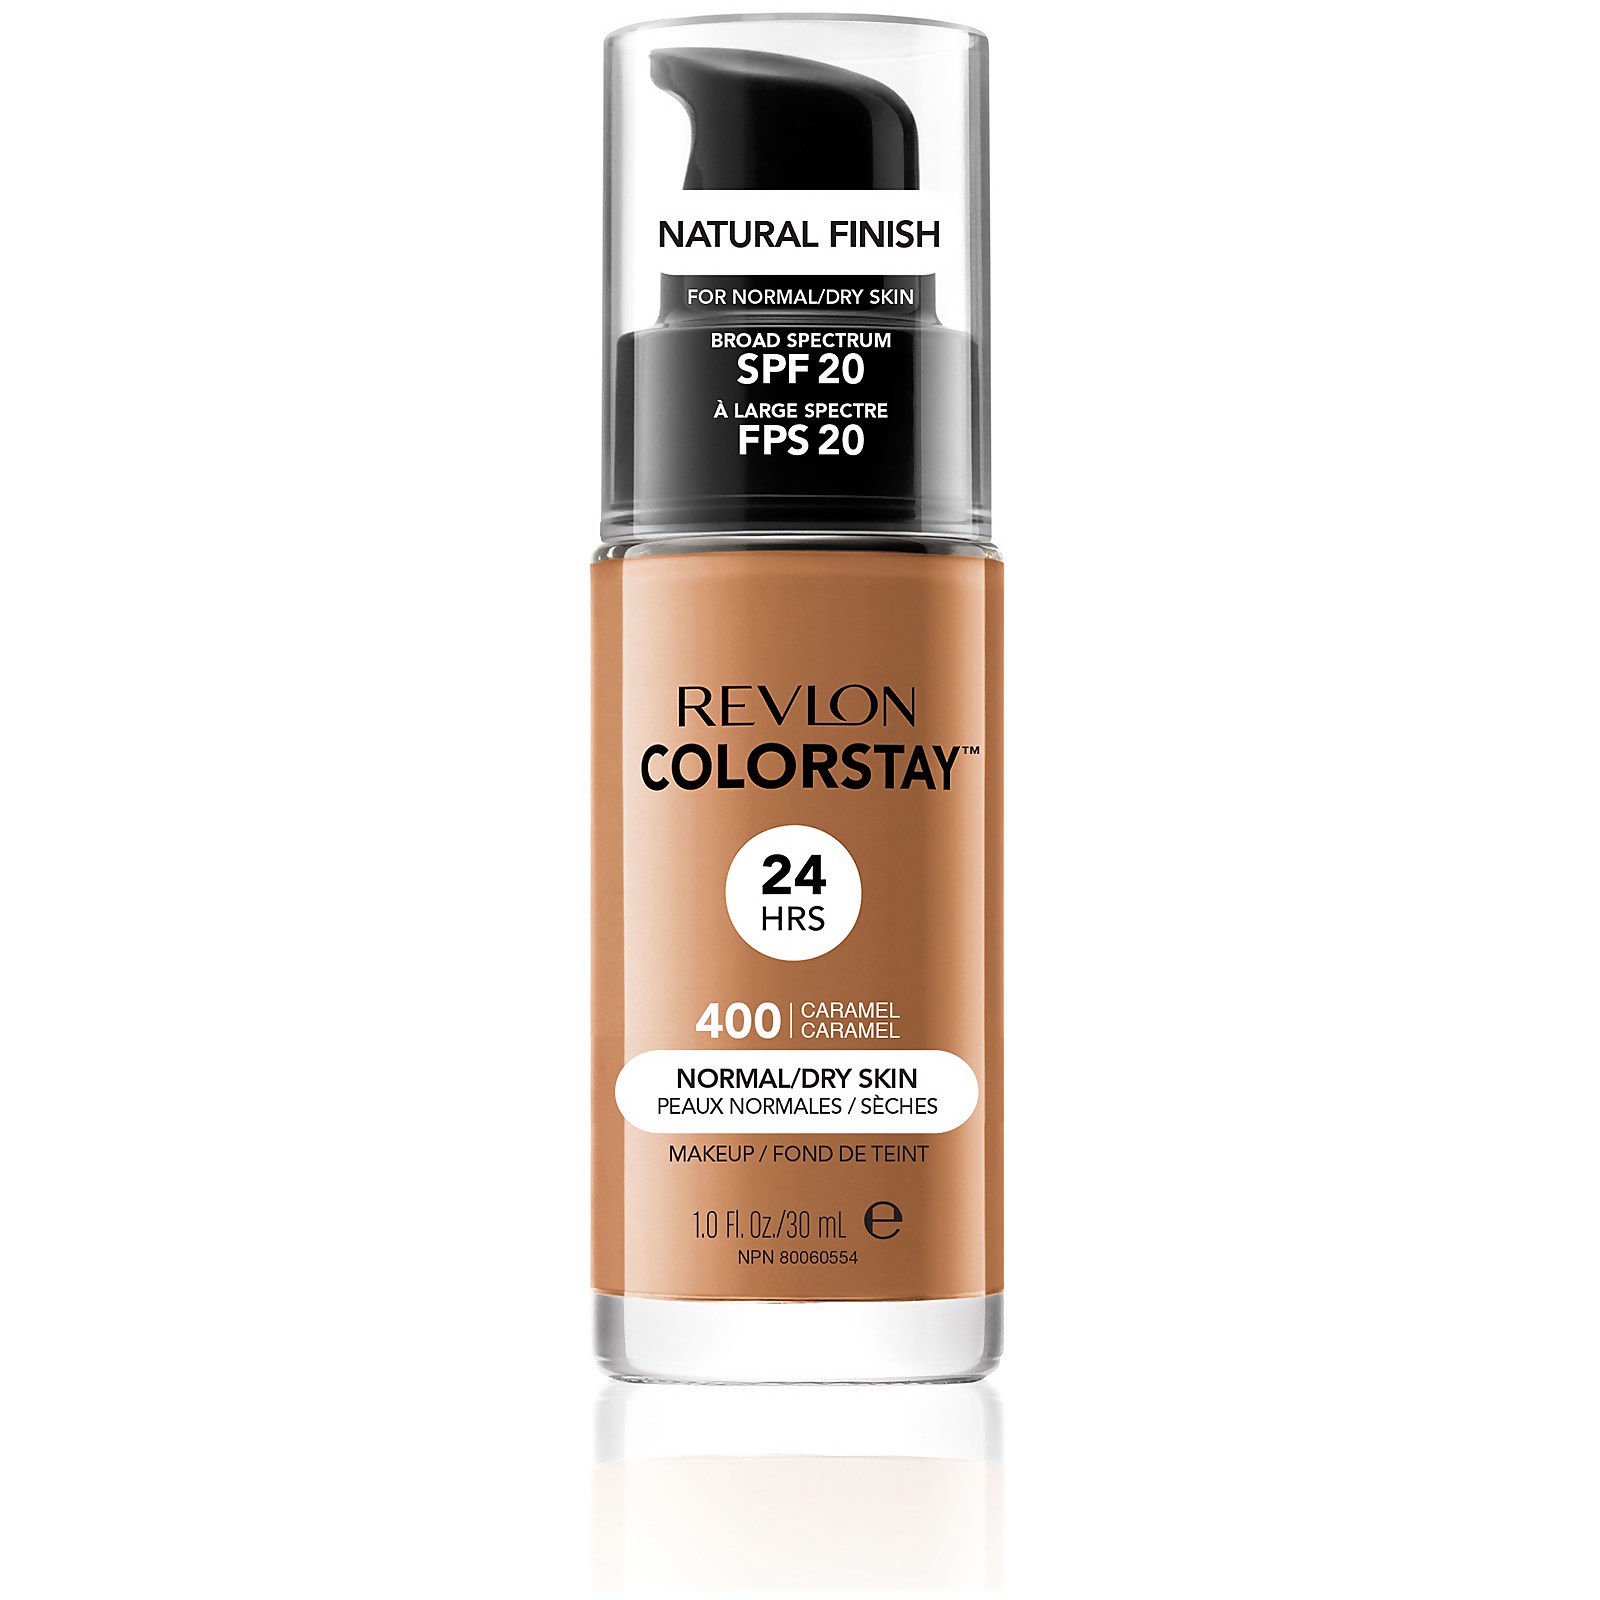 Revlon ColorStay Make-Up Foundation for Normal/Dry Skin (Various Shades) - Caramel